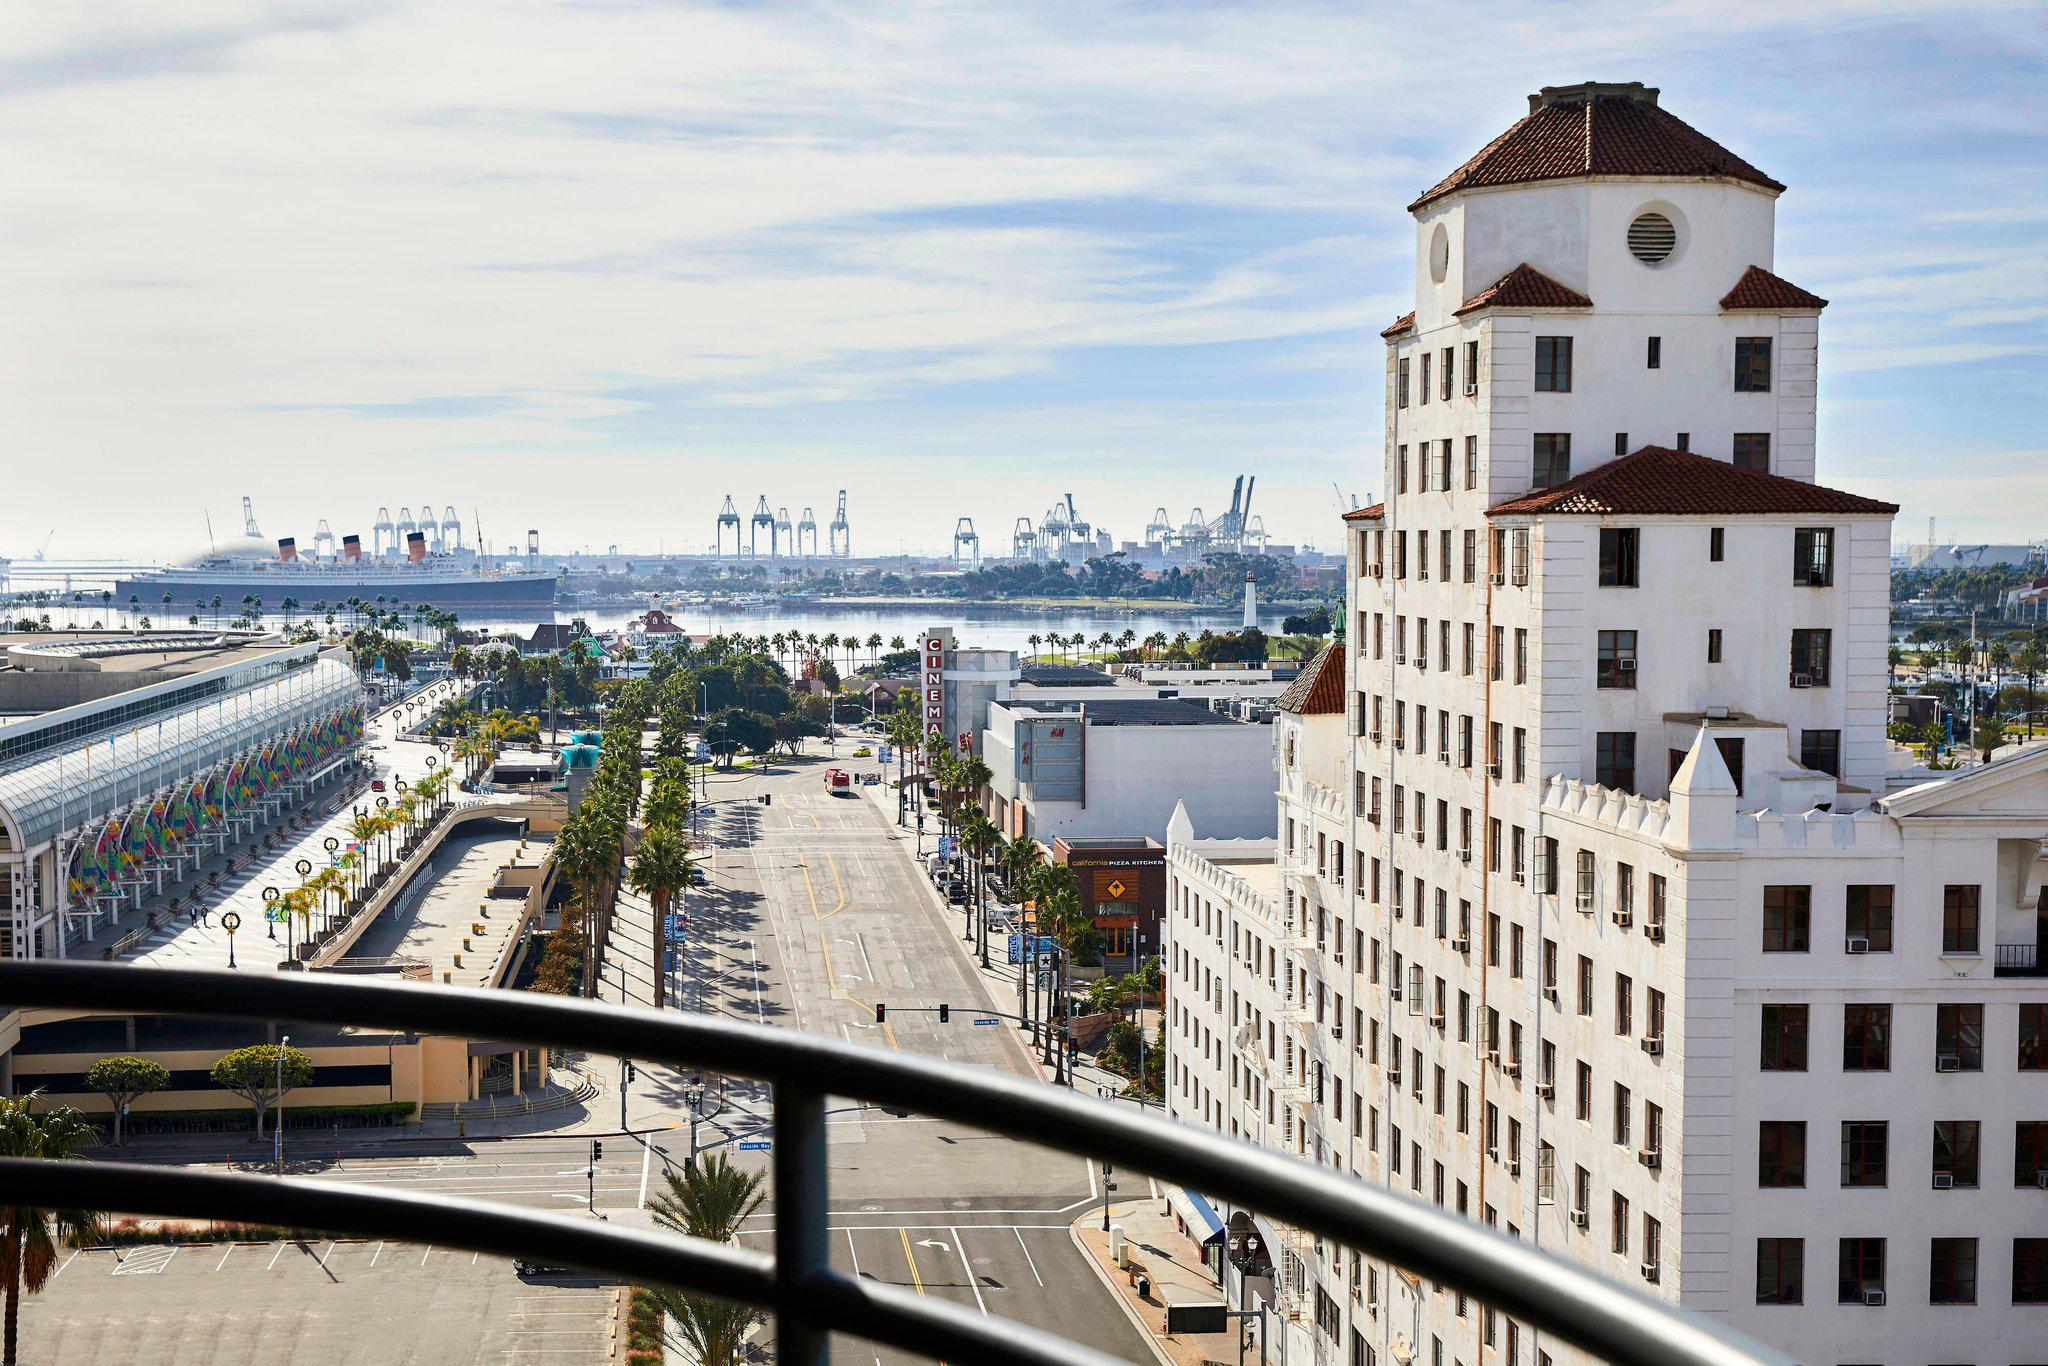 Renaissance Long Beach Hotel Photo